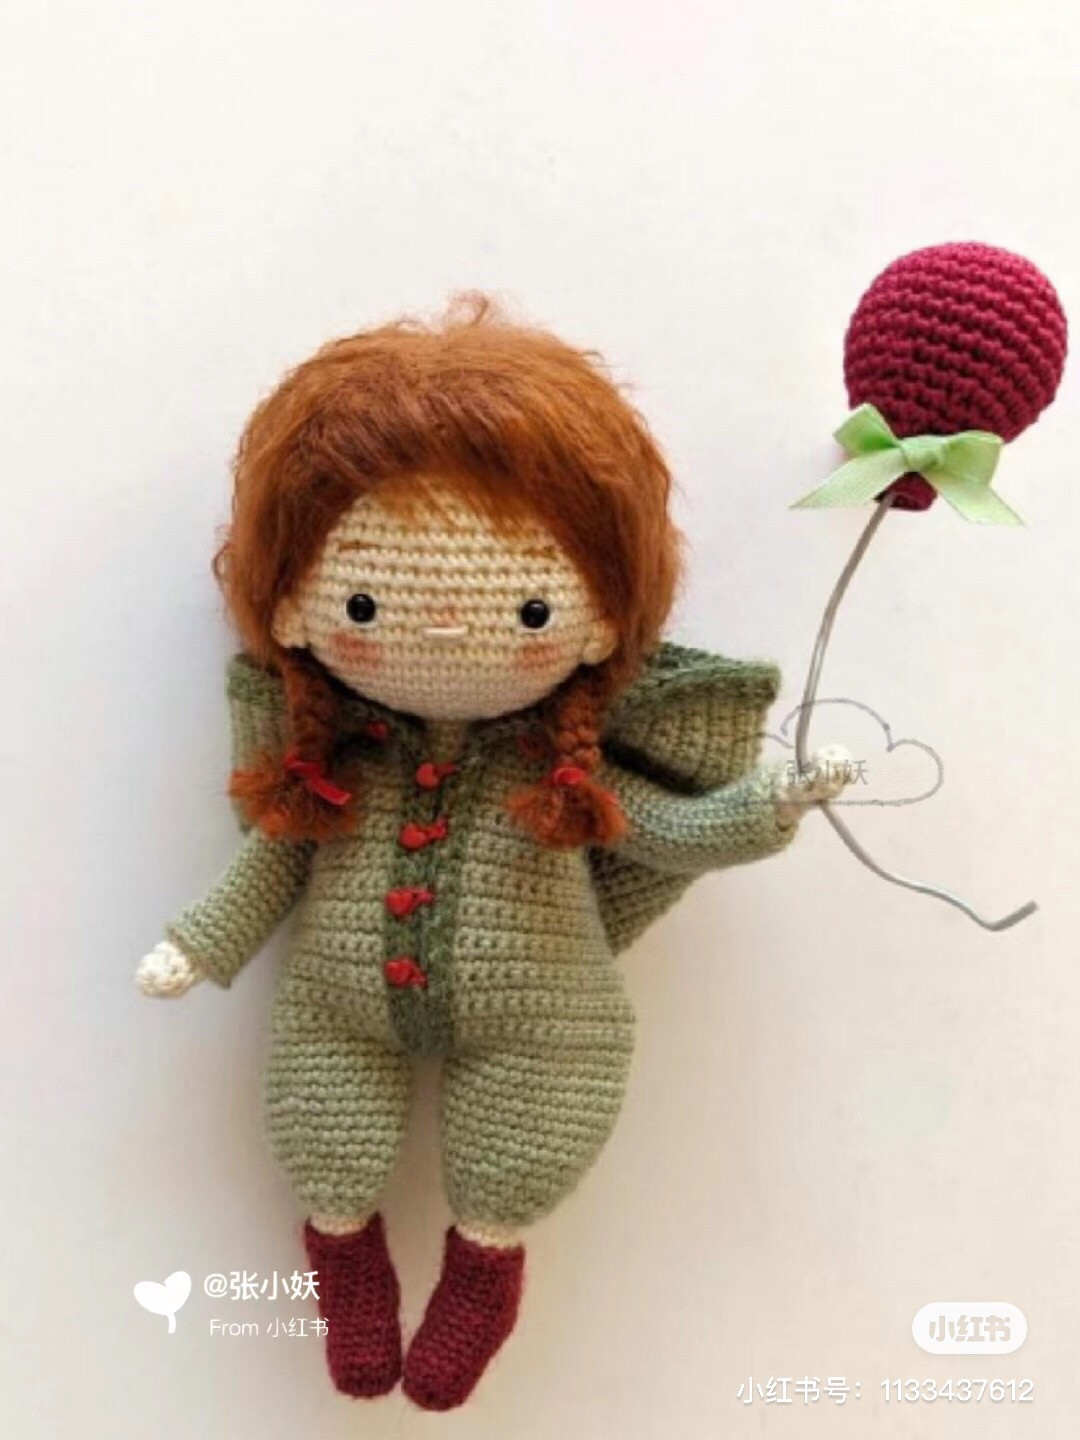 Little Michaela crochet pattern with a balloon